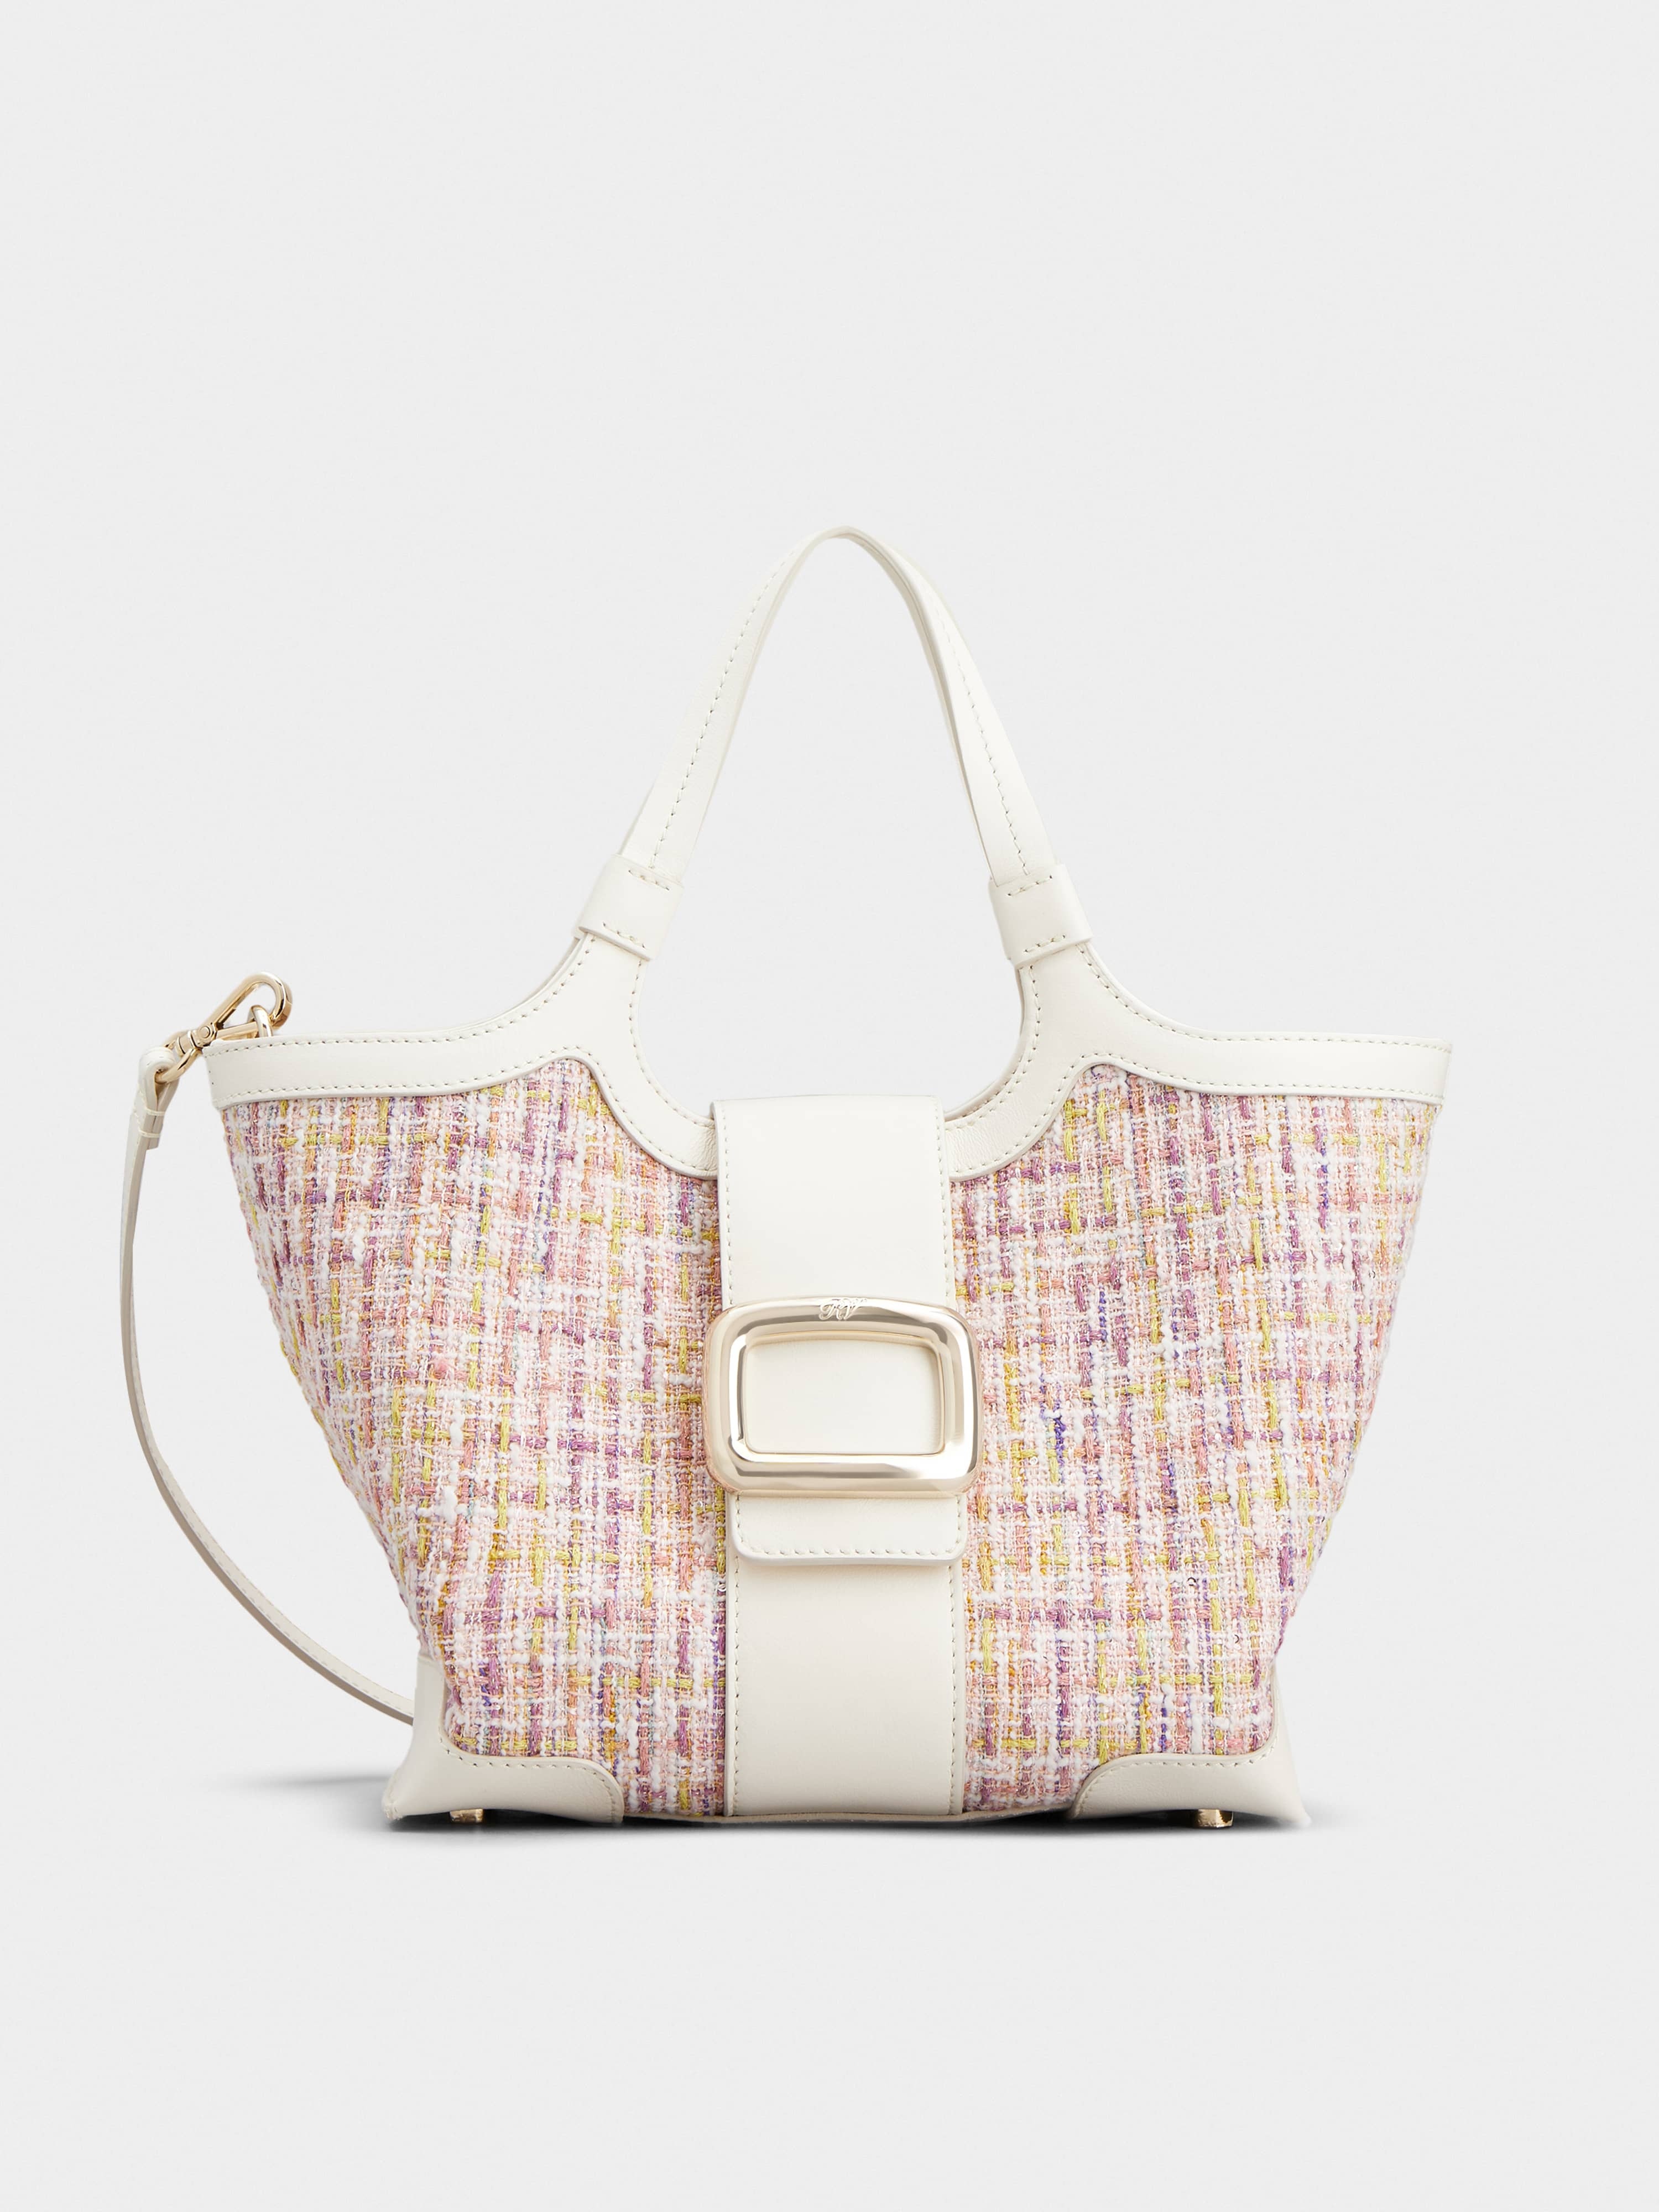 Viv' Choc Mini Shopping Bag in Fabric - 1